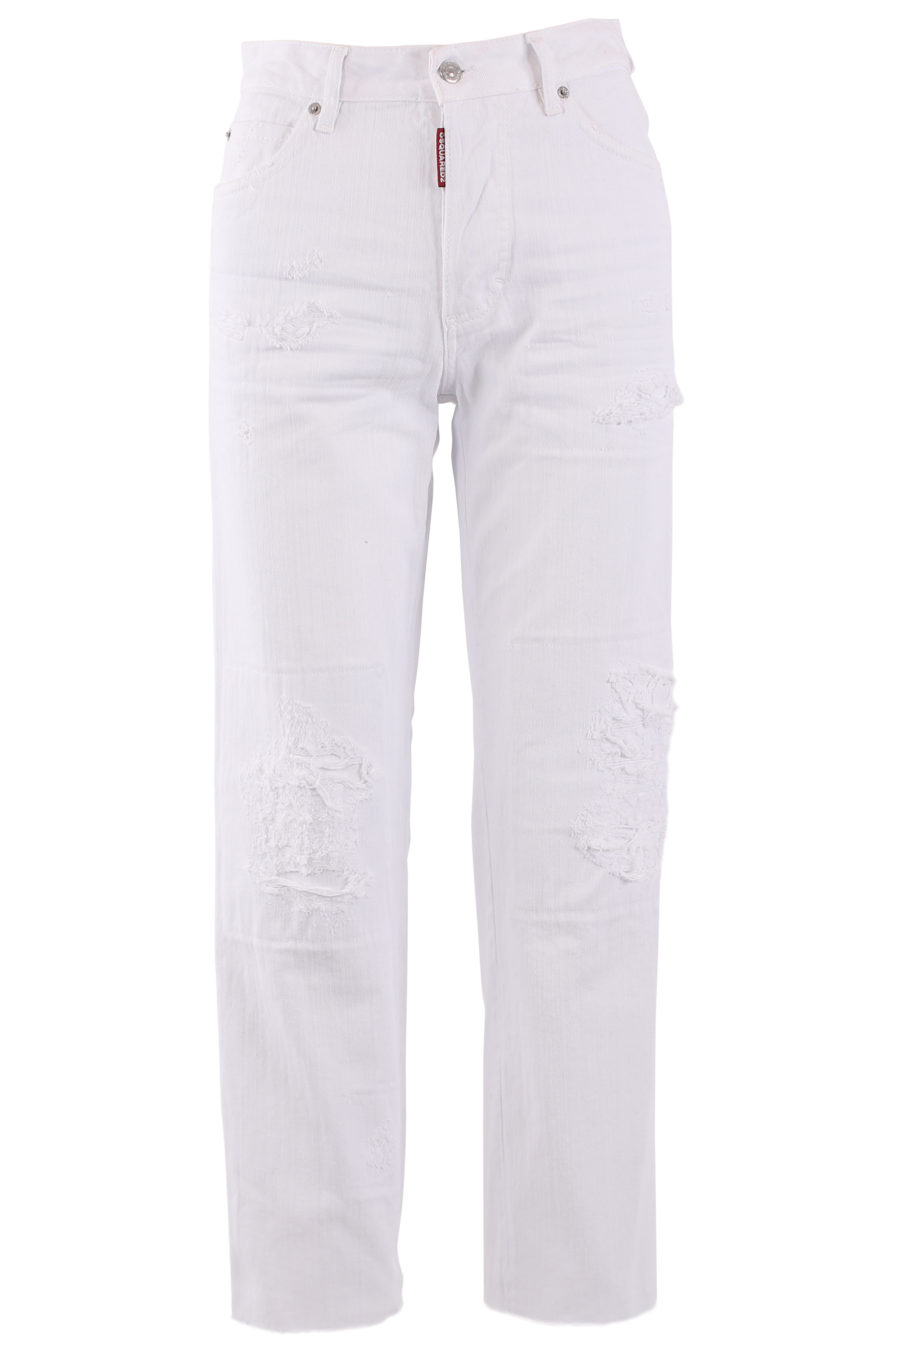 Worn white jeans "Boston jean" - IMG 6712